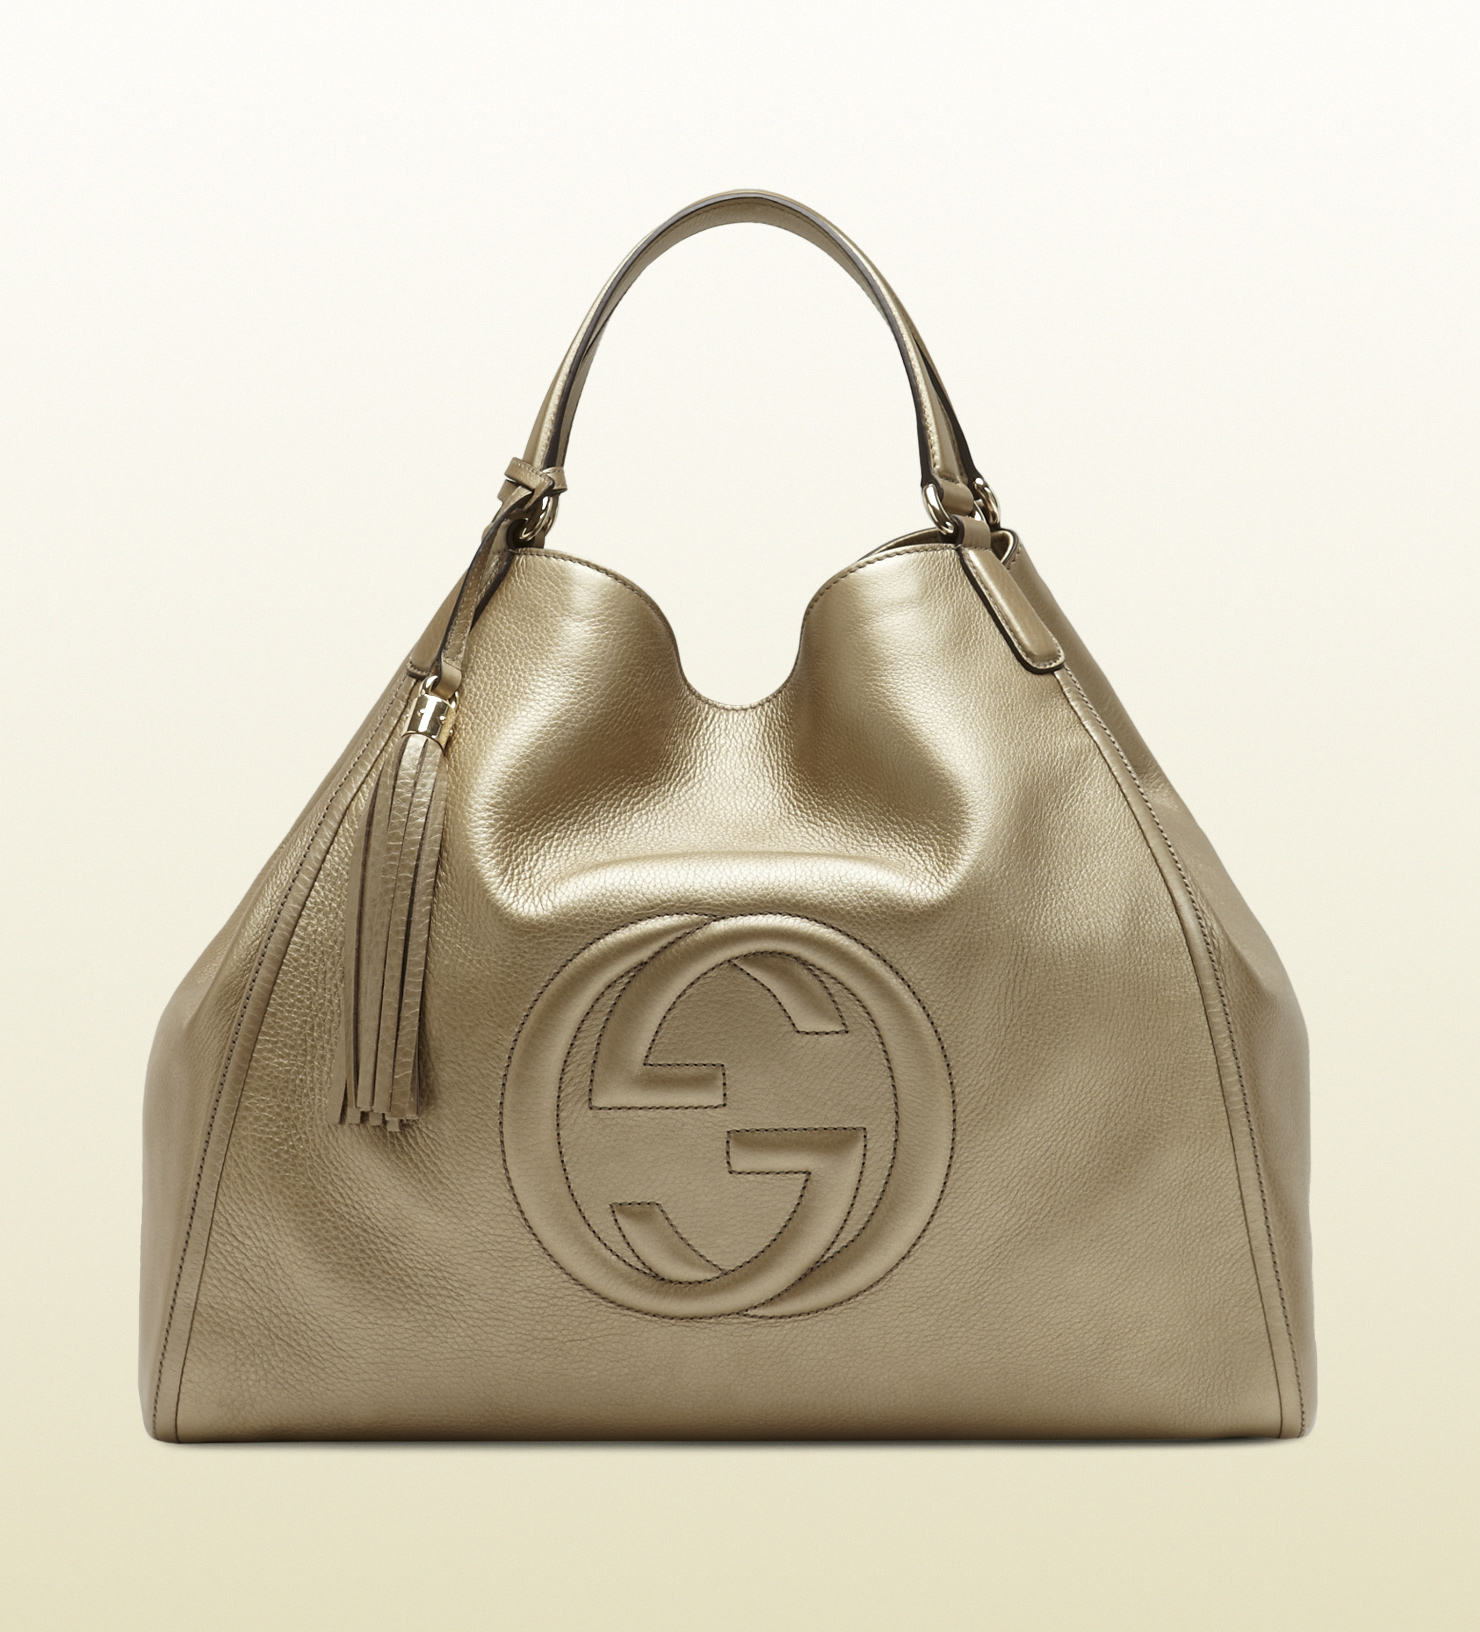 Gucci Soho Metallic Leather Shoulder Bag in Green (beige) | Lyst